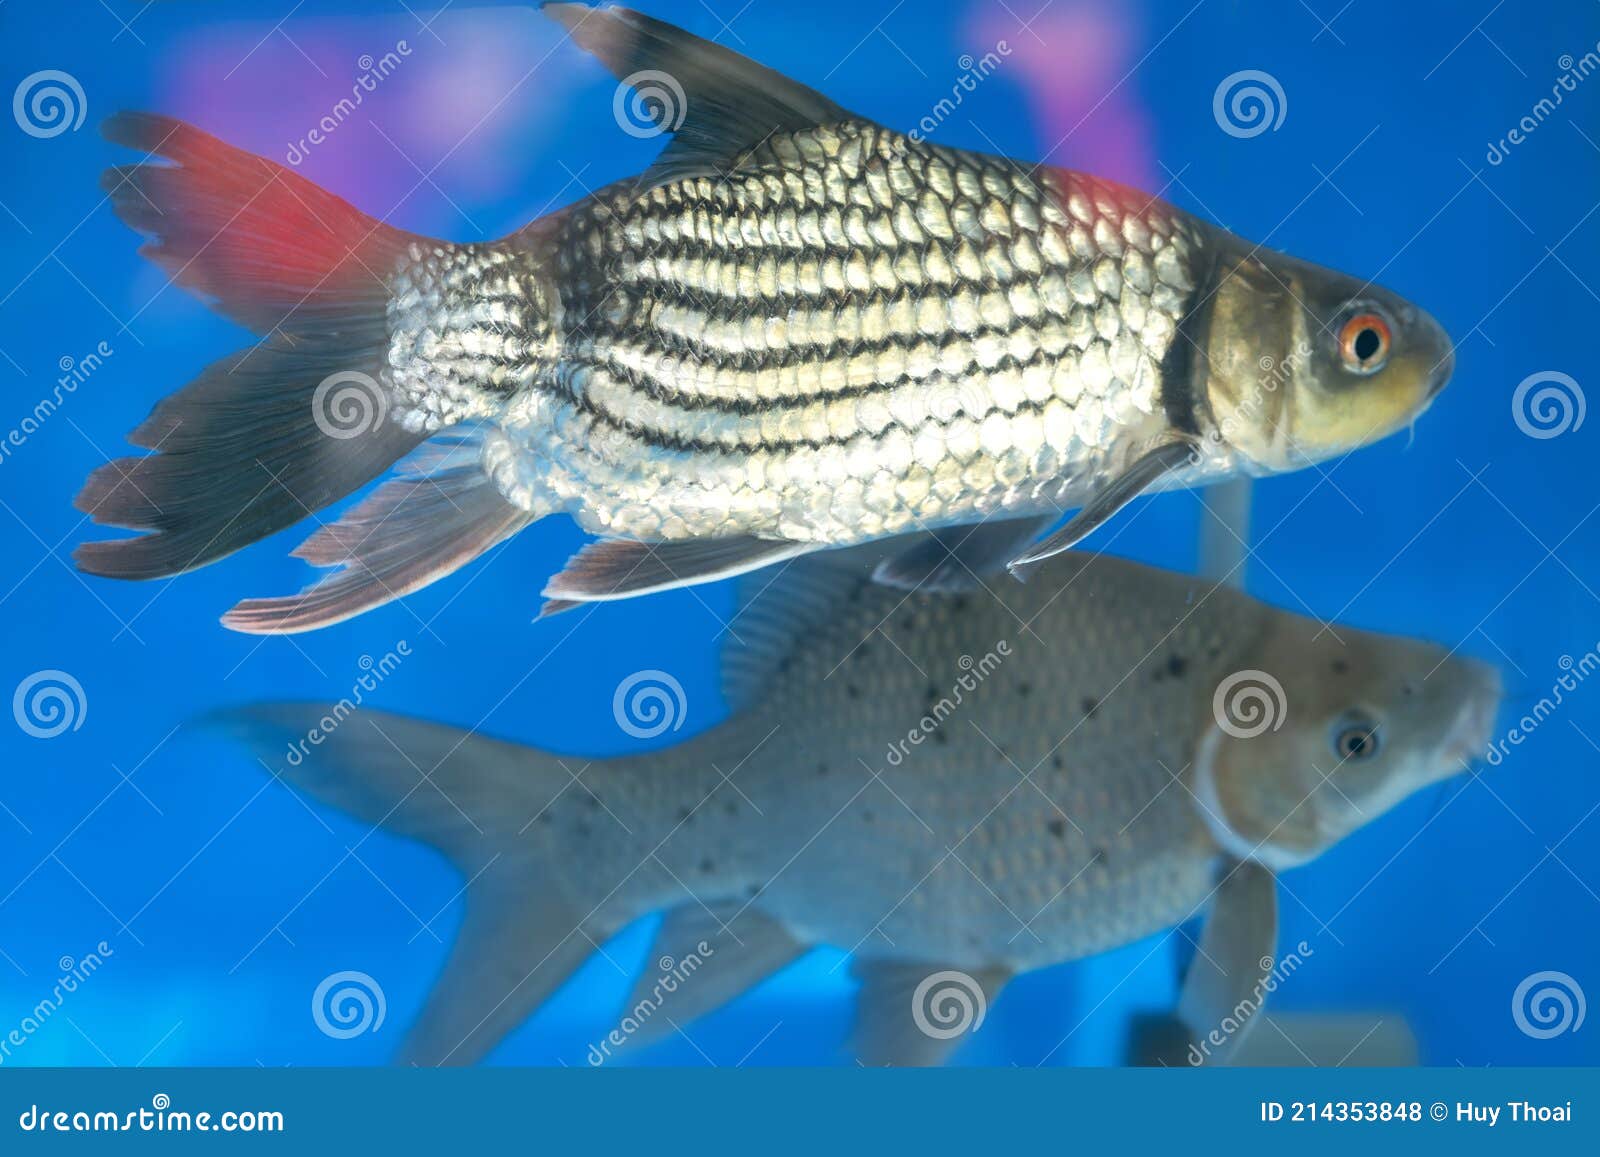 Beautiful Fish Swimming in Fish Tank Stock Photo - Image of tail